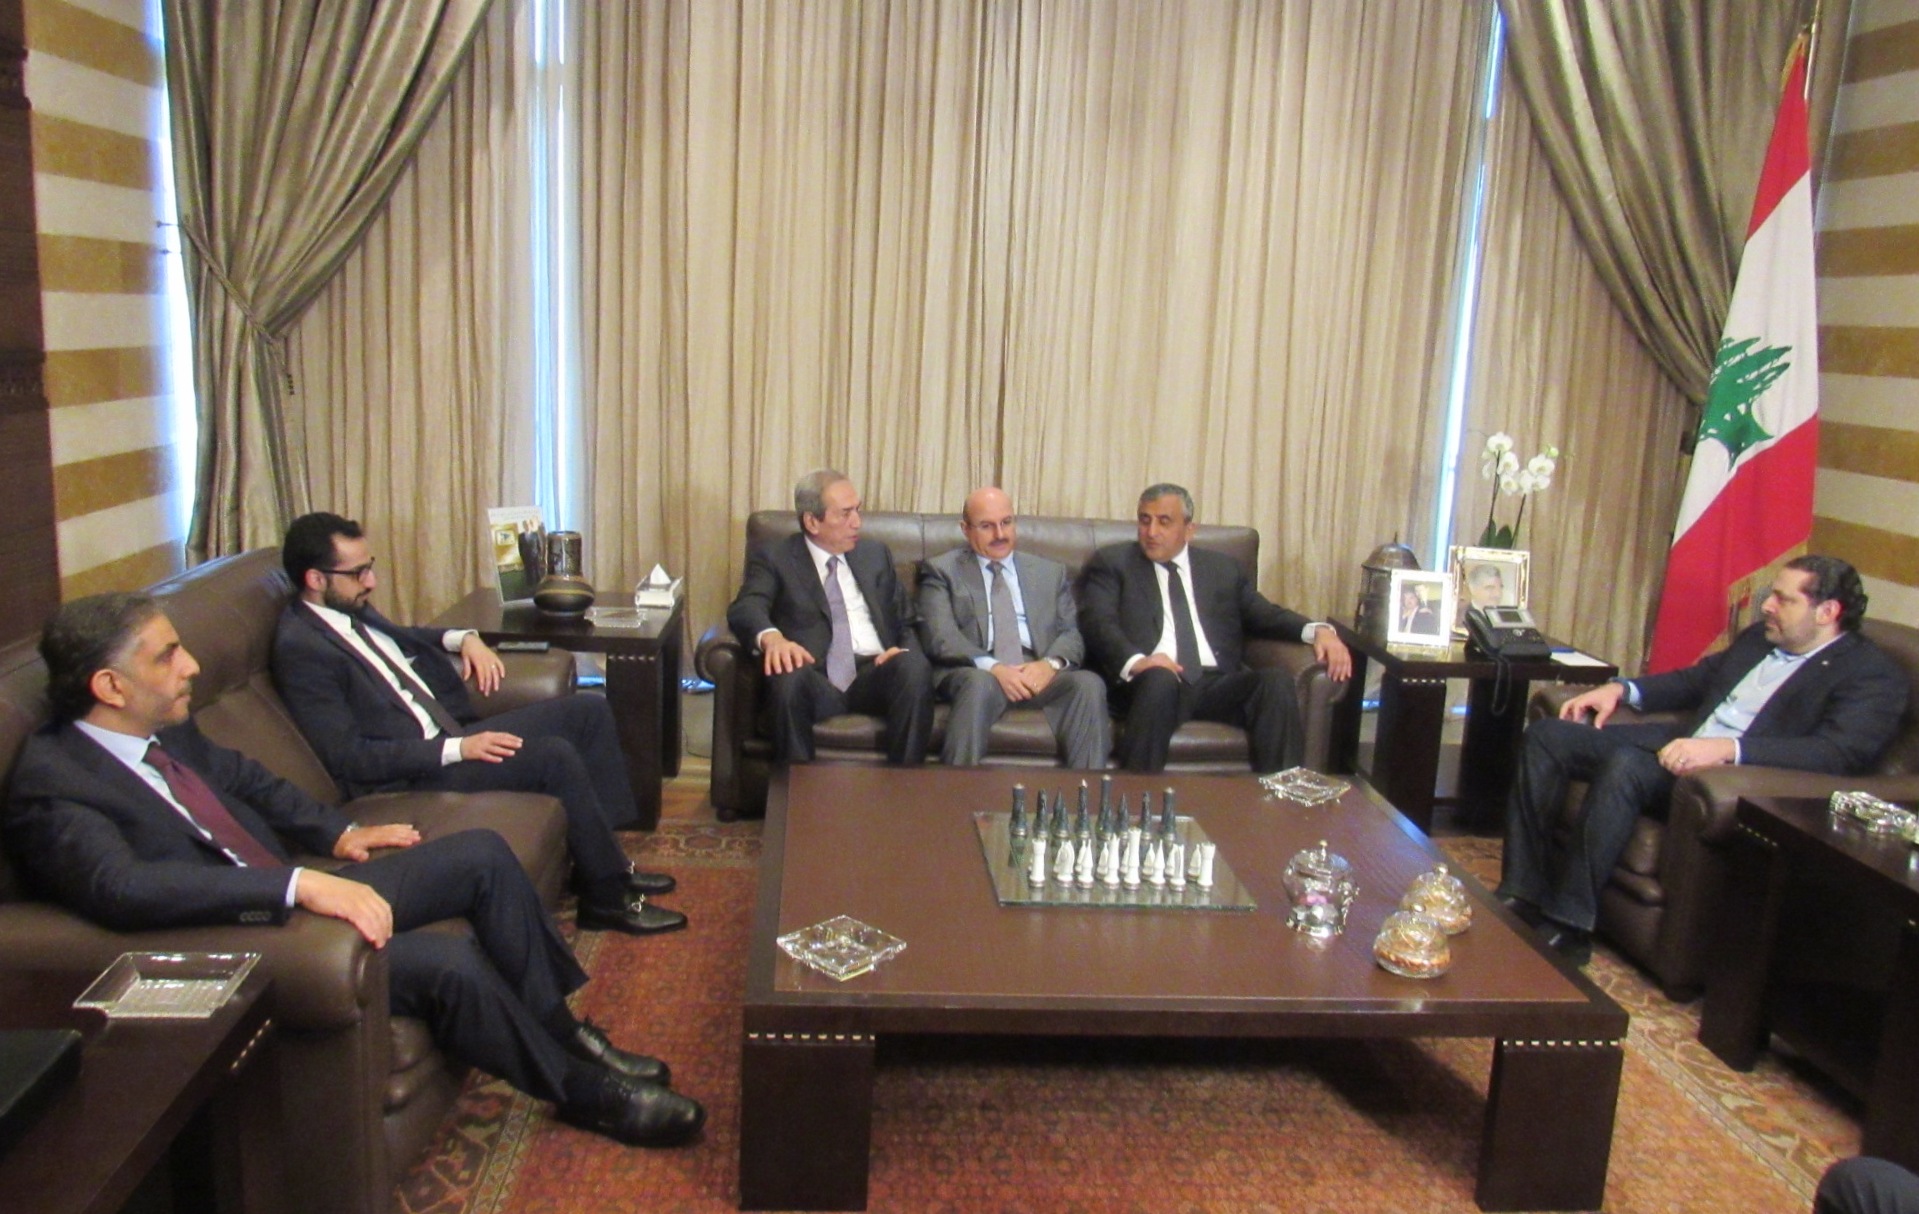 Director General of the Kuwait Fund for Arab Economic Development (KFAED) Abdulwahab A. Al-Bader meets with Lebanese Prime Minister Saad Al-Hariri